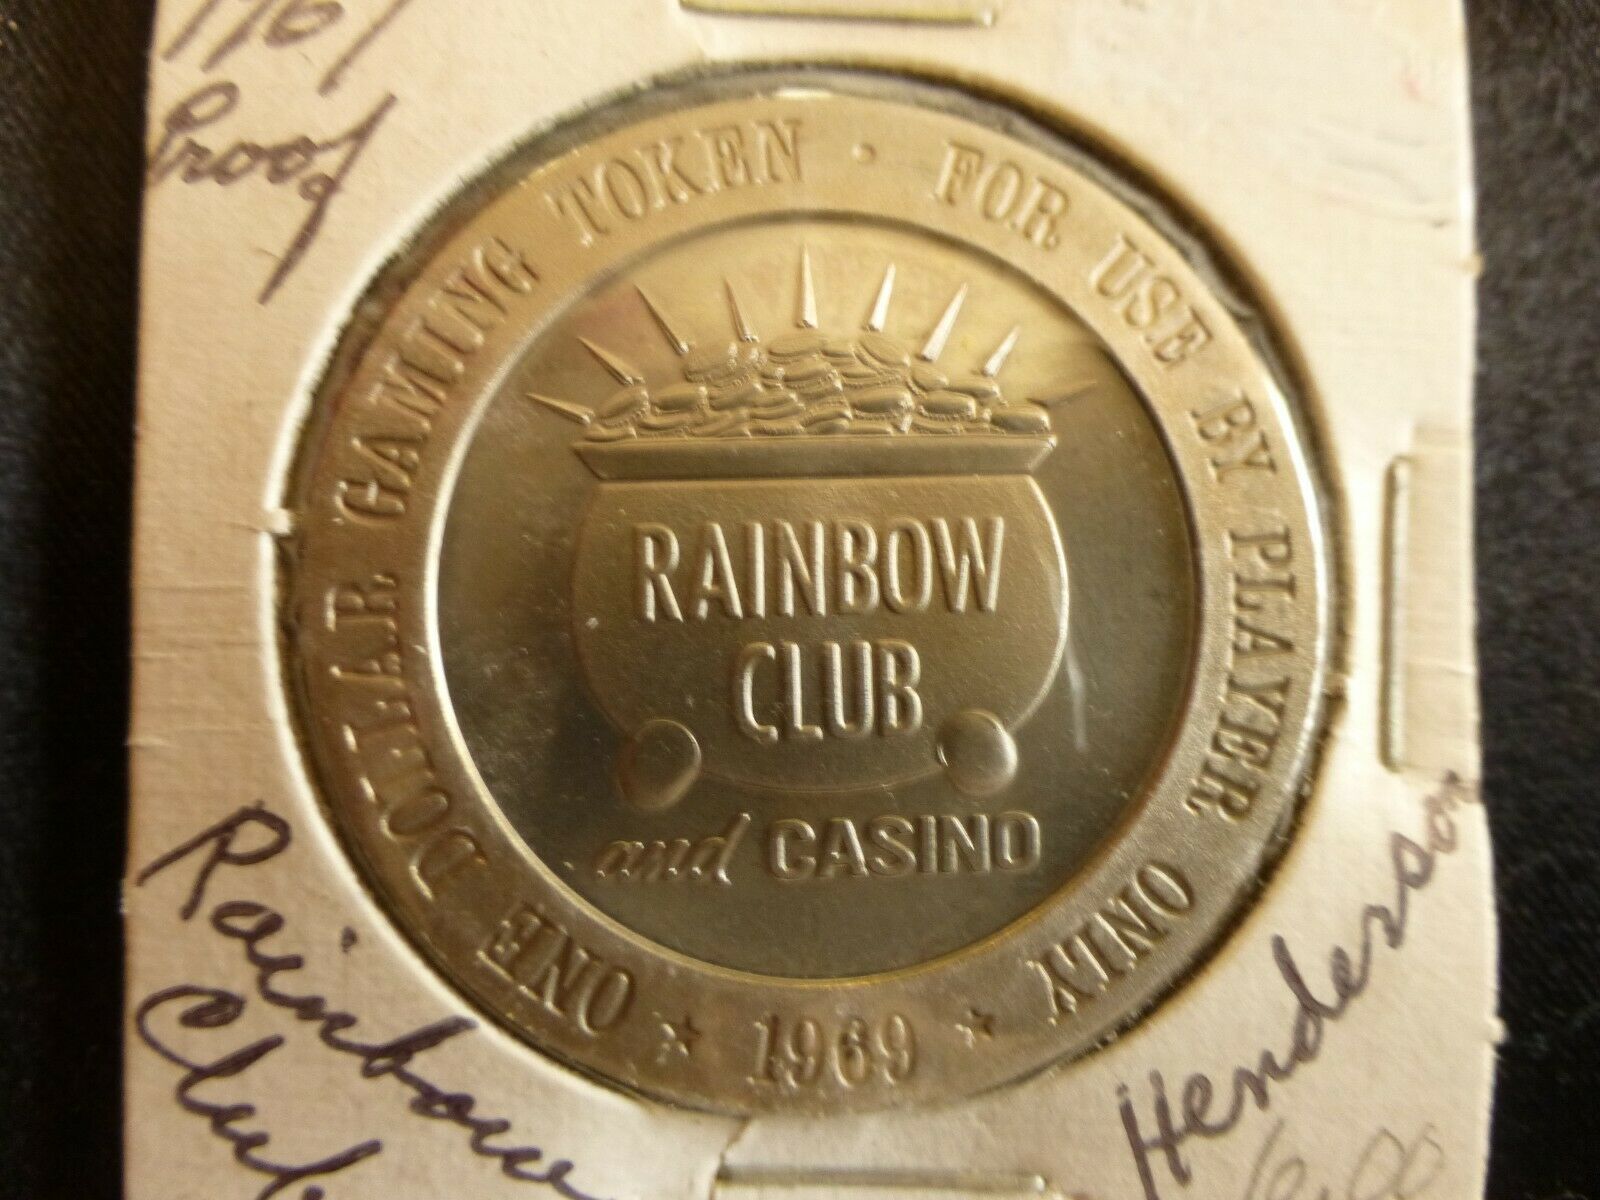 Rainbow Club And Casino Henderson Nevada $1 Gaming Token Dated 1969